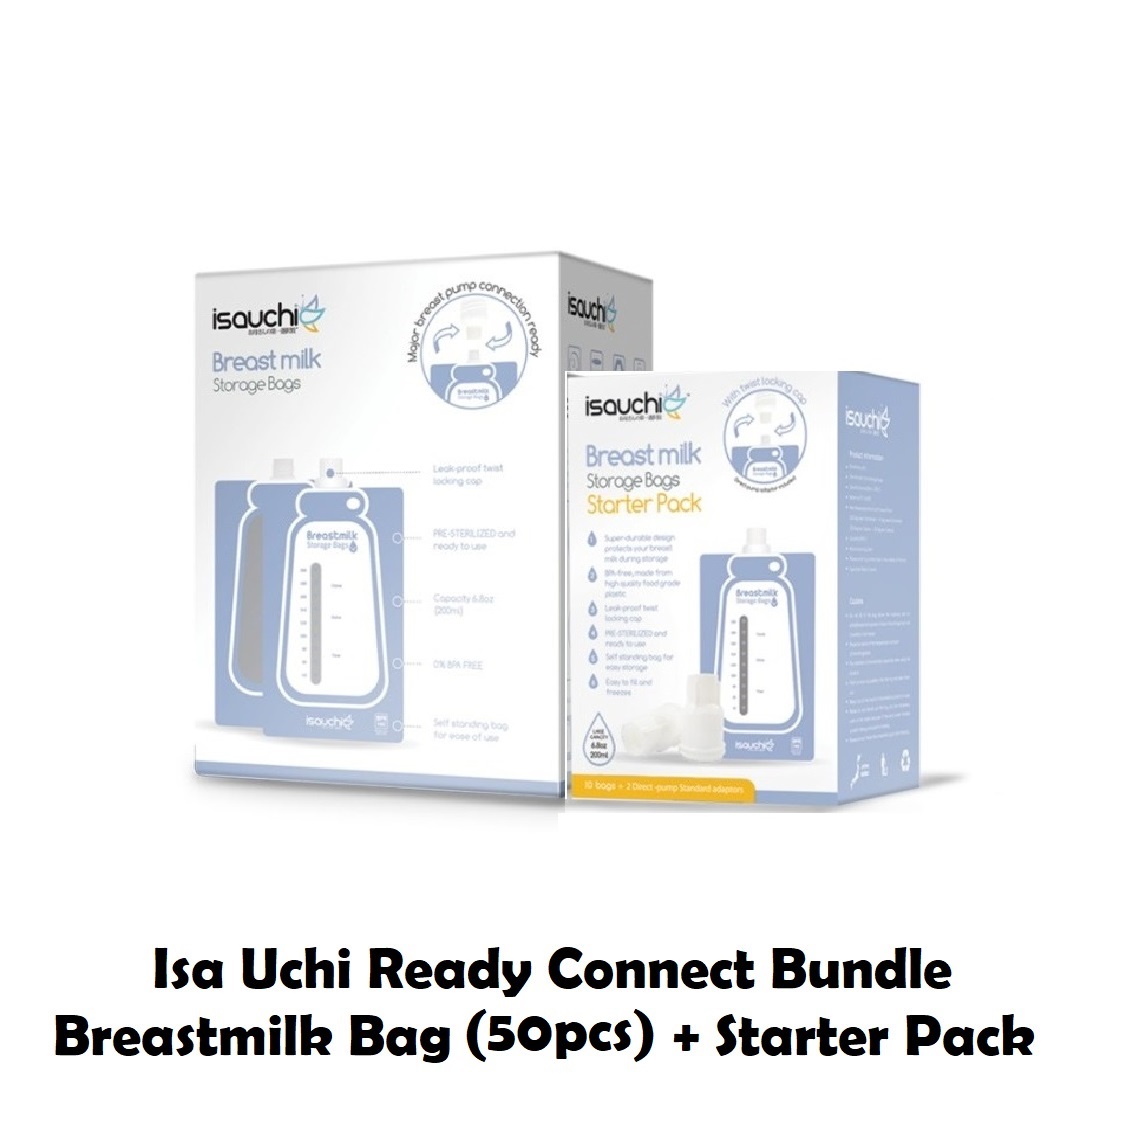 Isa Uchi Ready Connect Breastmilk Bag (50pcs) + Starter Pack Bundle